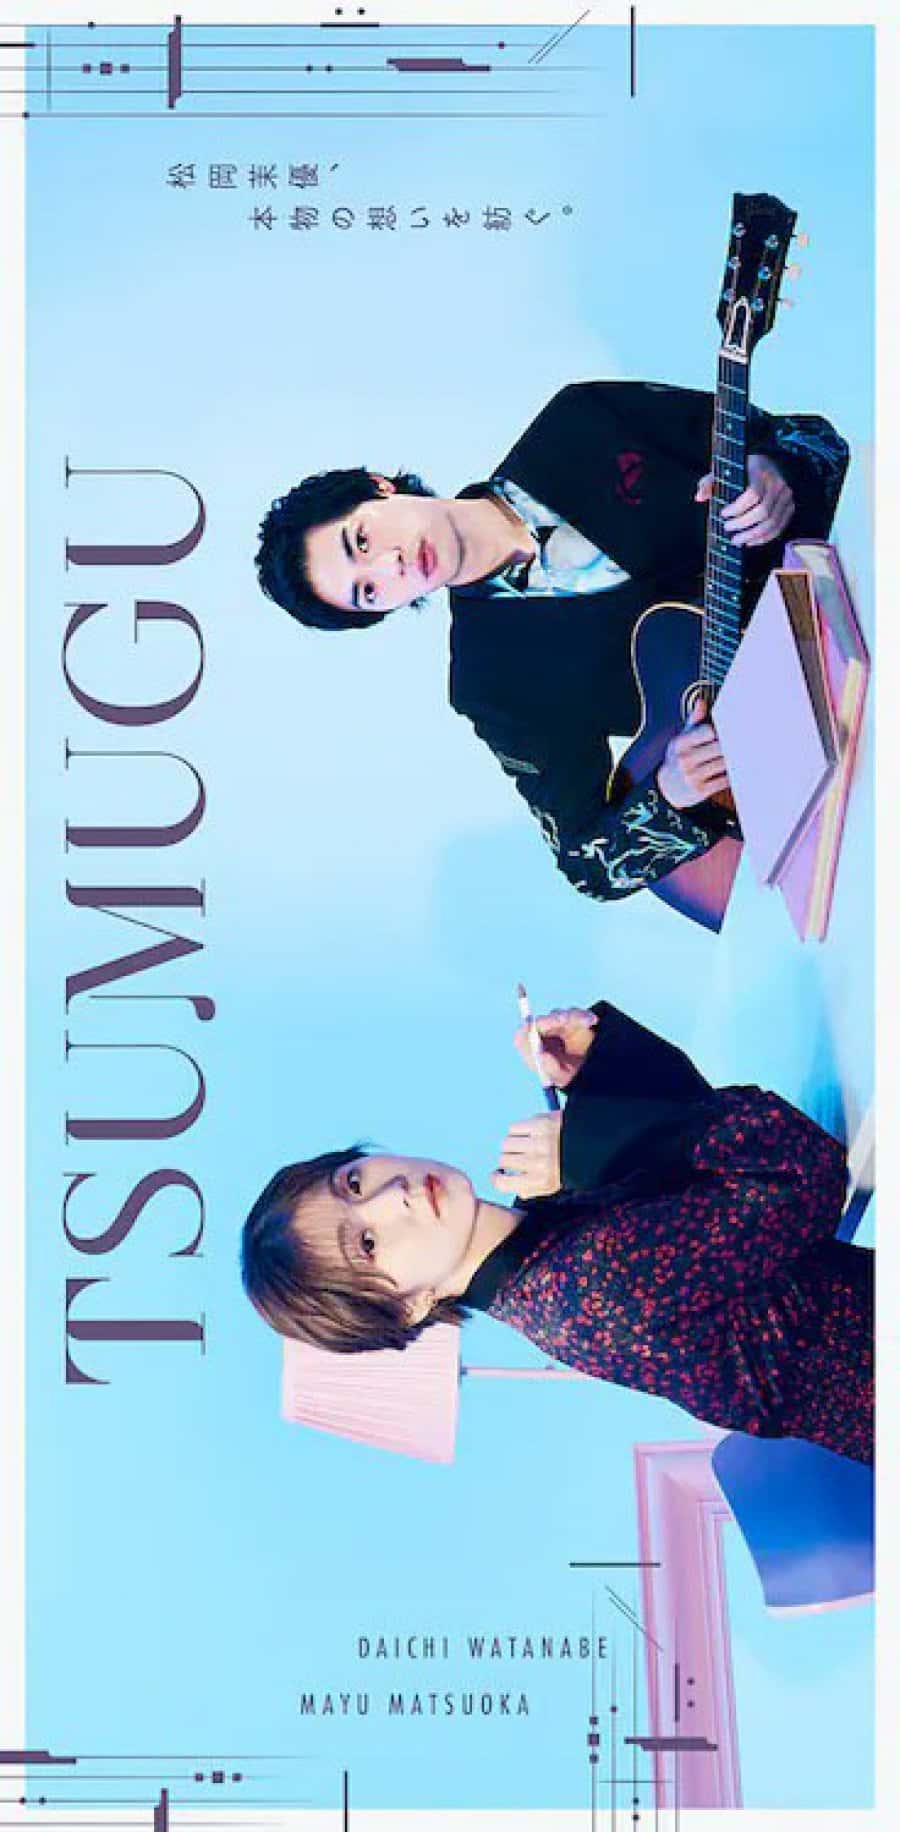 Tsumugu - Sinopsis, Pemain, OST, Episode, Review